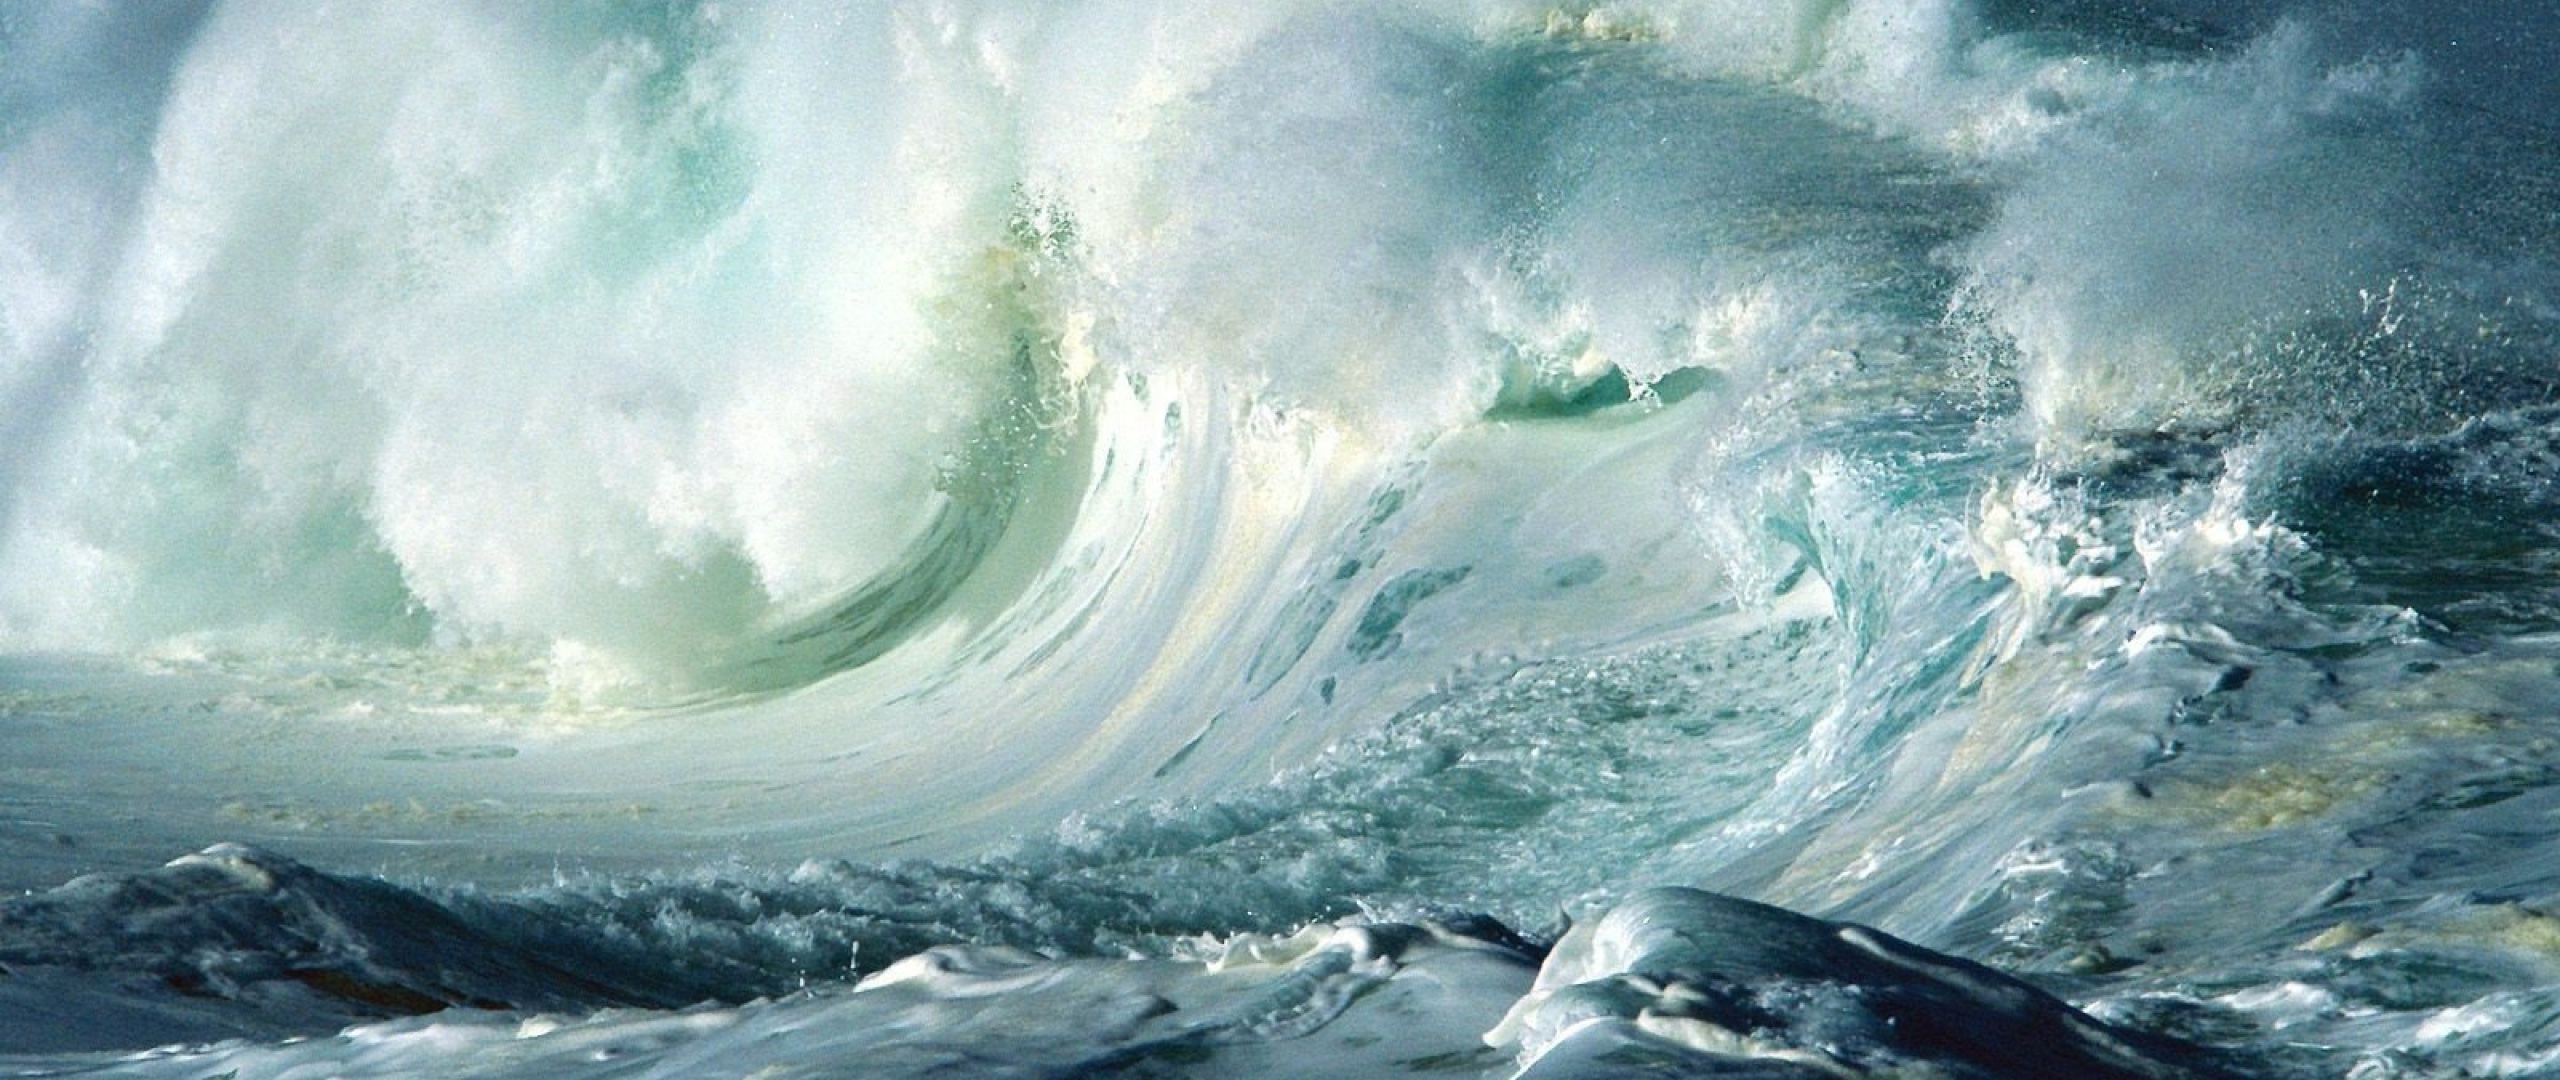 ocean-wallpaper-66 Try these ocean wallpaper examples that look awe-inspiring